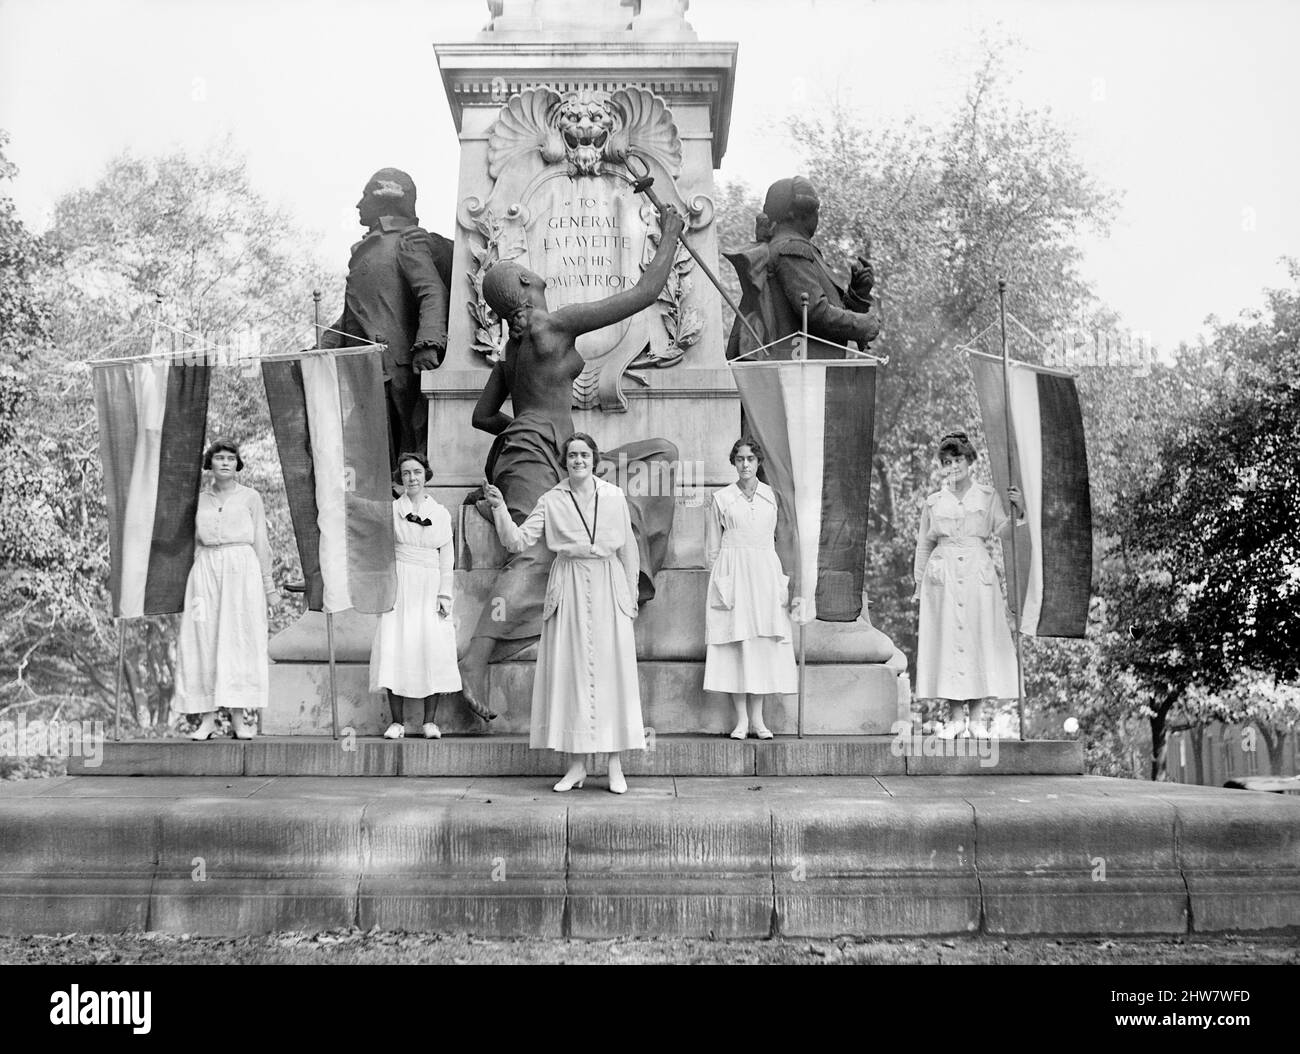 Sufragáneas en la Estatua de Lafayette, Washington DC, EE.UU., Harris & Ewing, 1918 Foto de stock